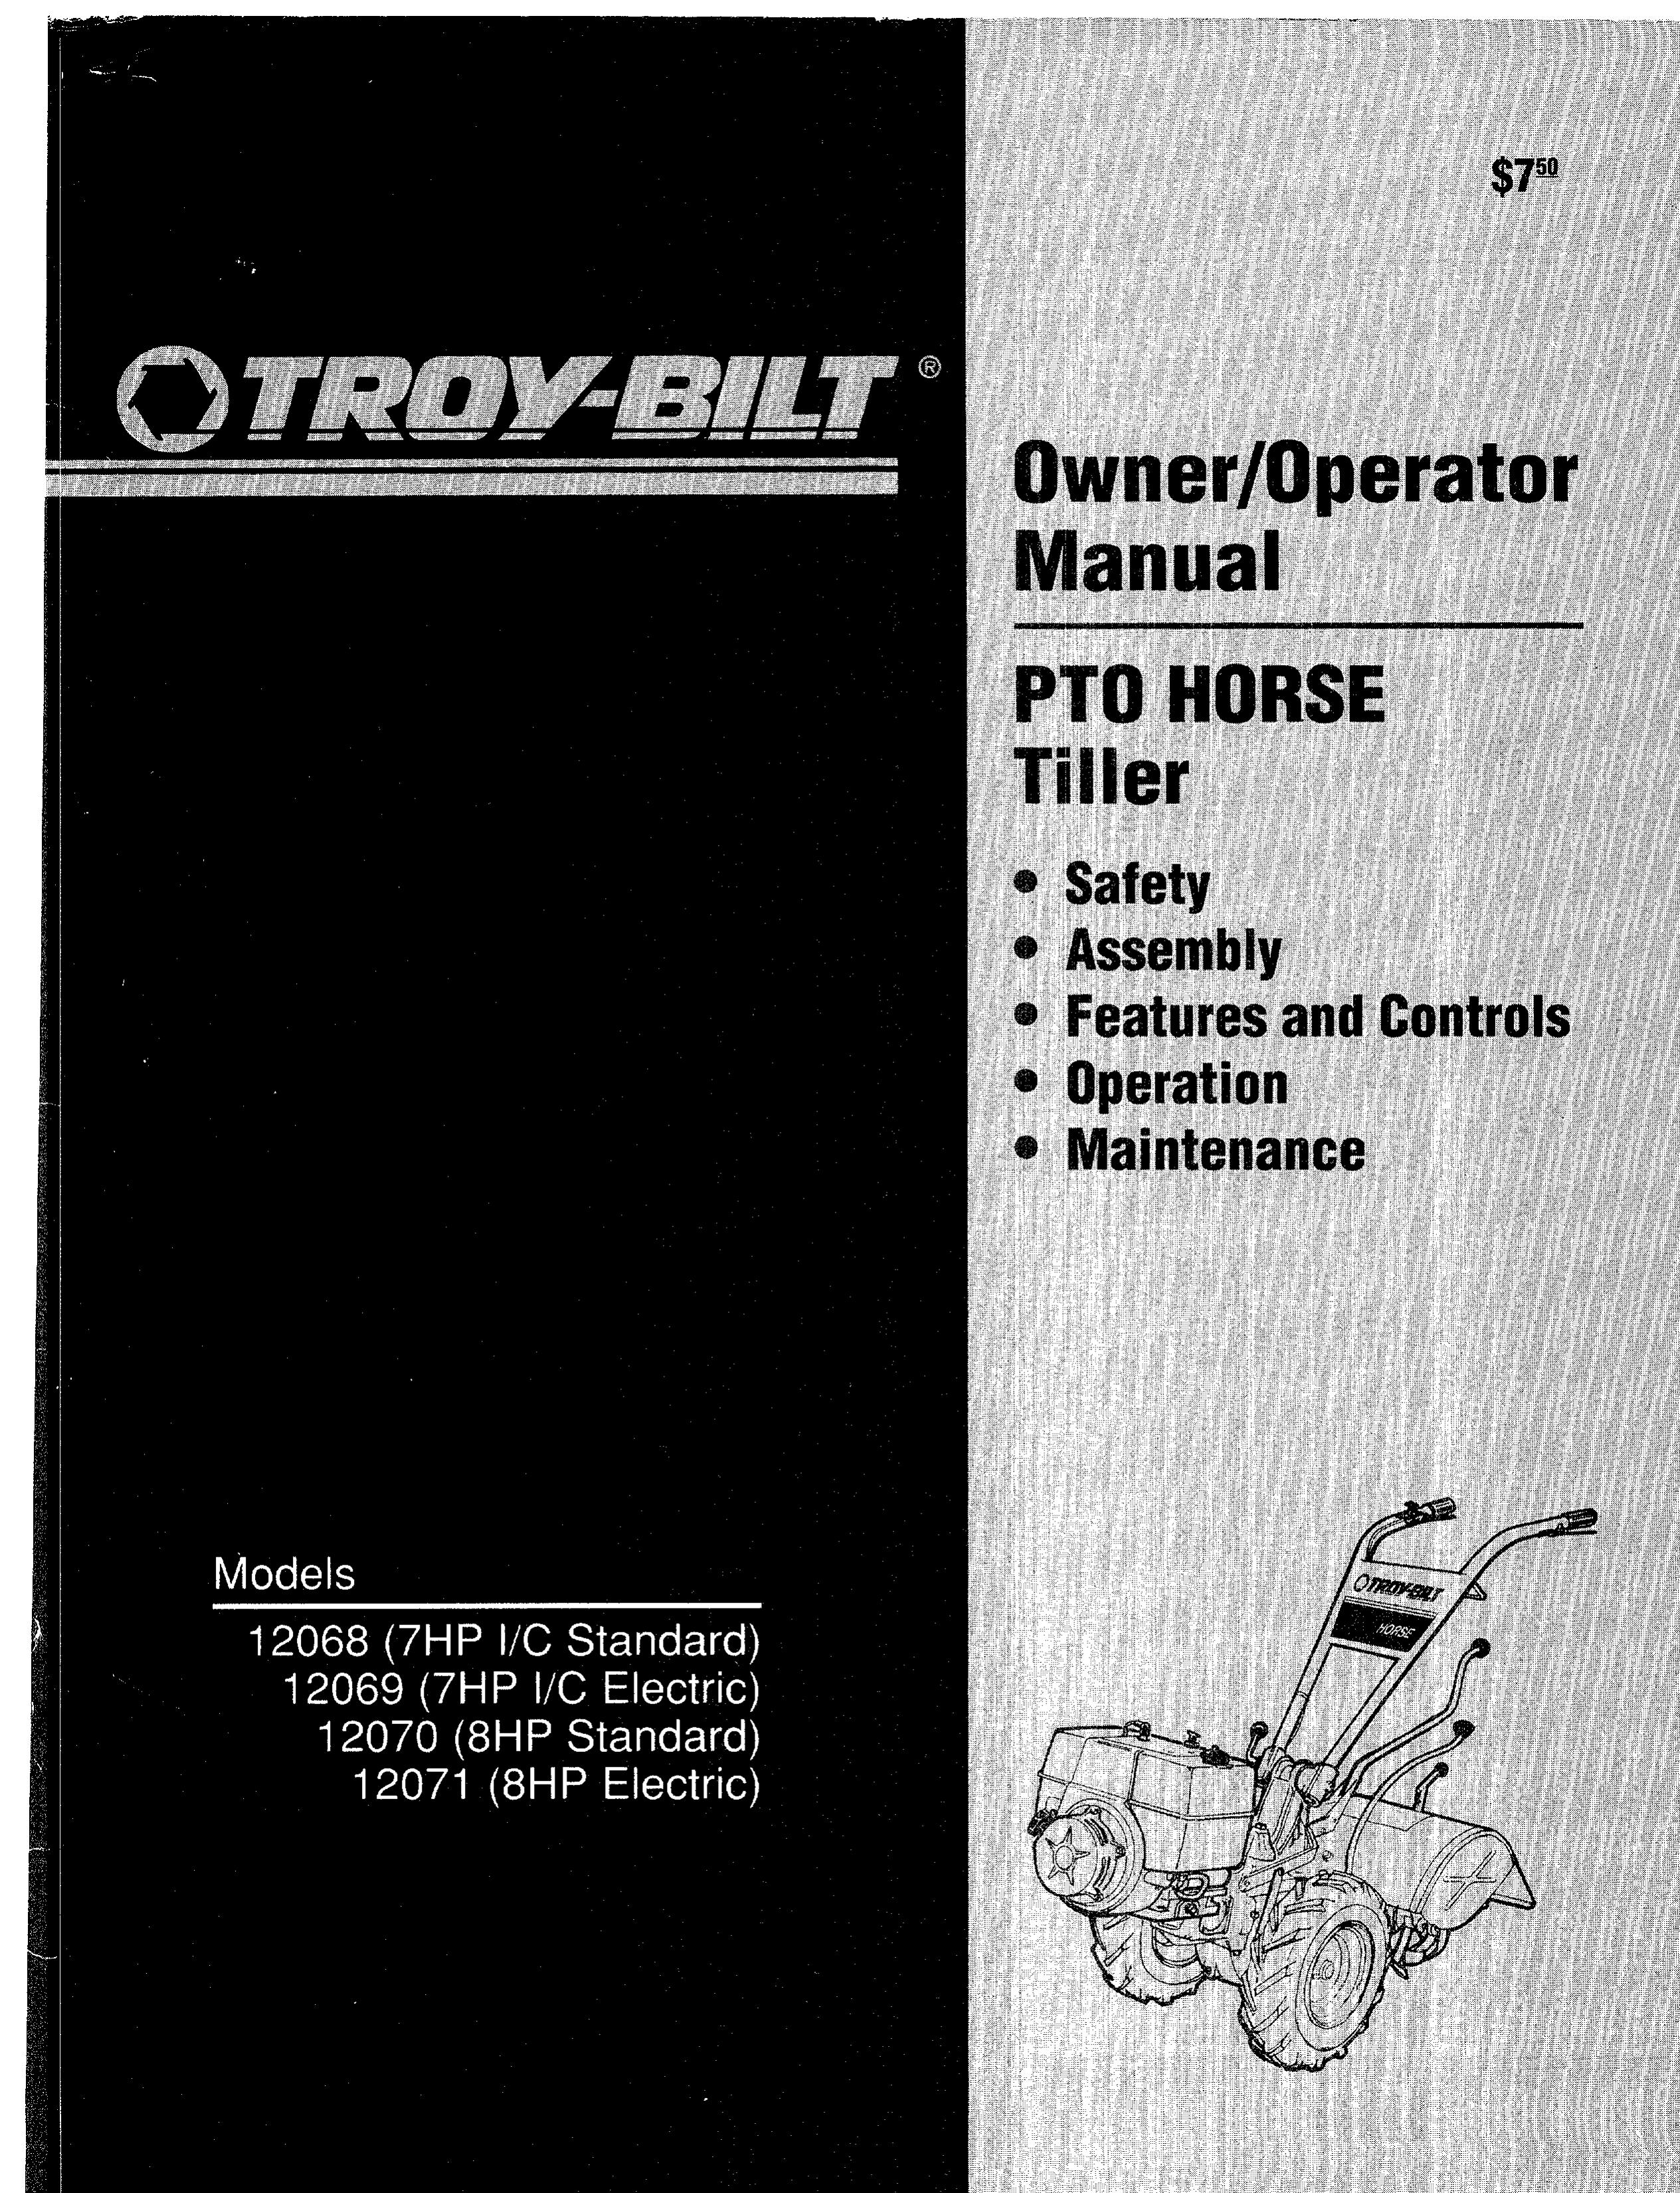 Troy-Bilt 12070-8HP Tiller User Manual